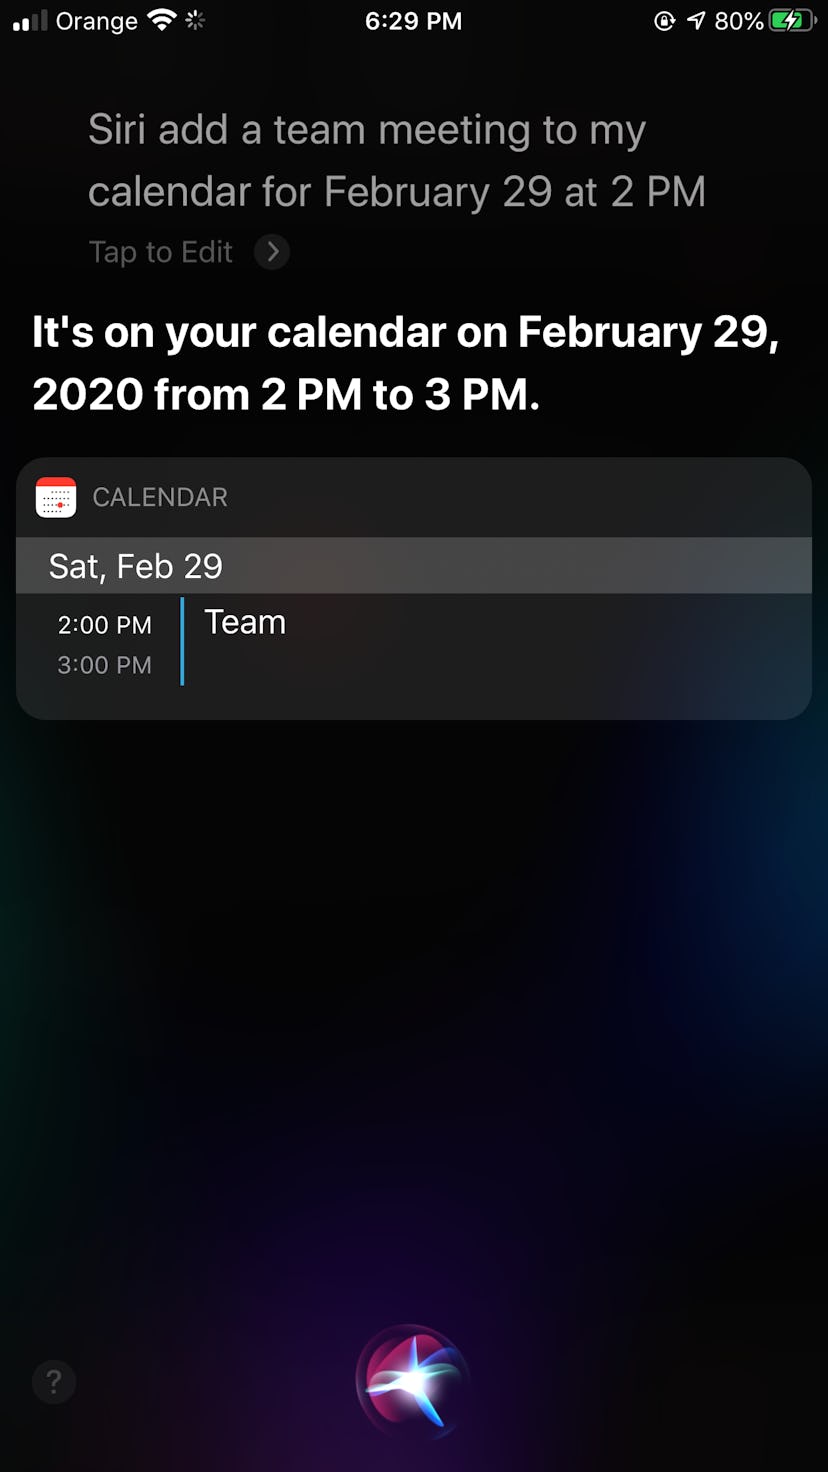 You can add calendar events through Siri. 